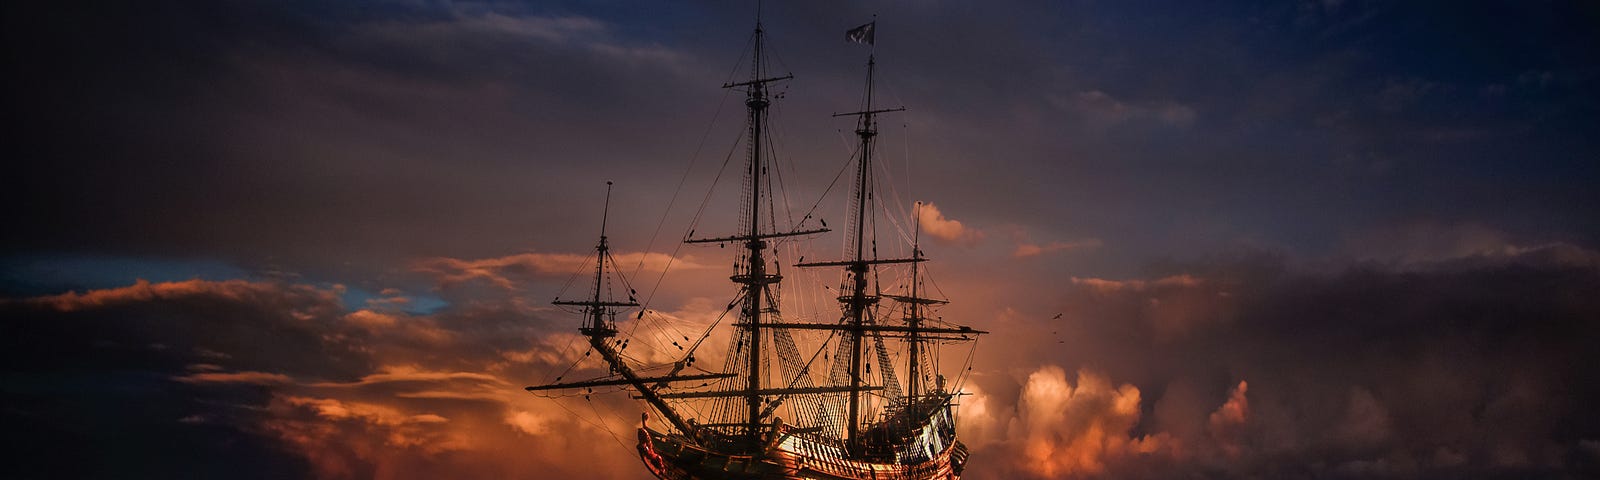 A pirate ship sailing the high seas at sunset.